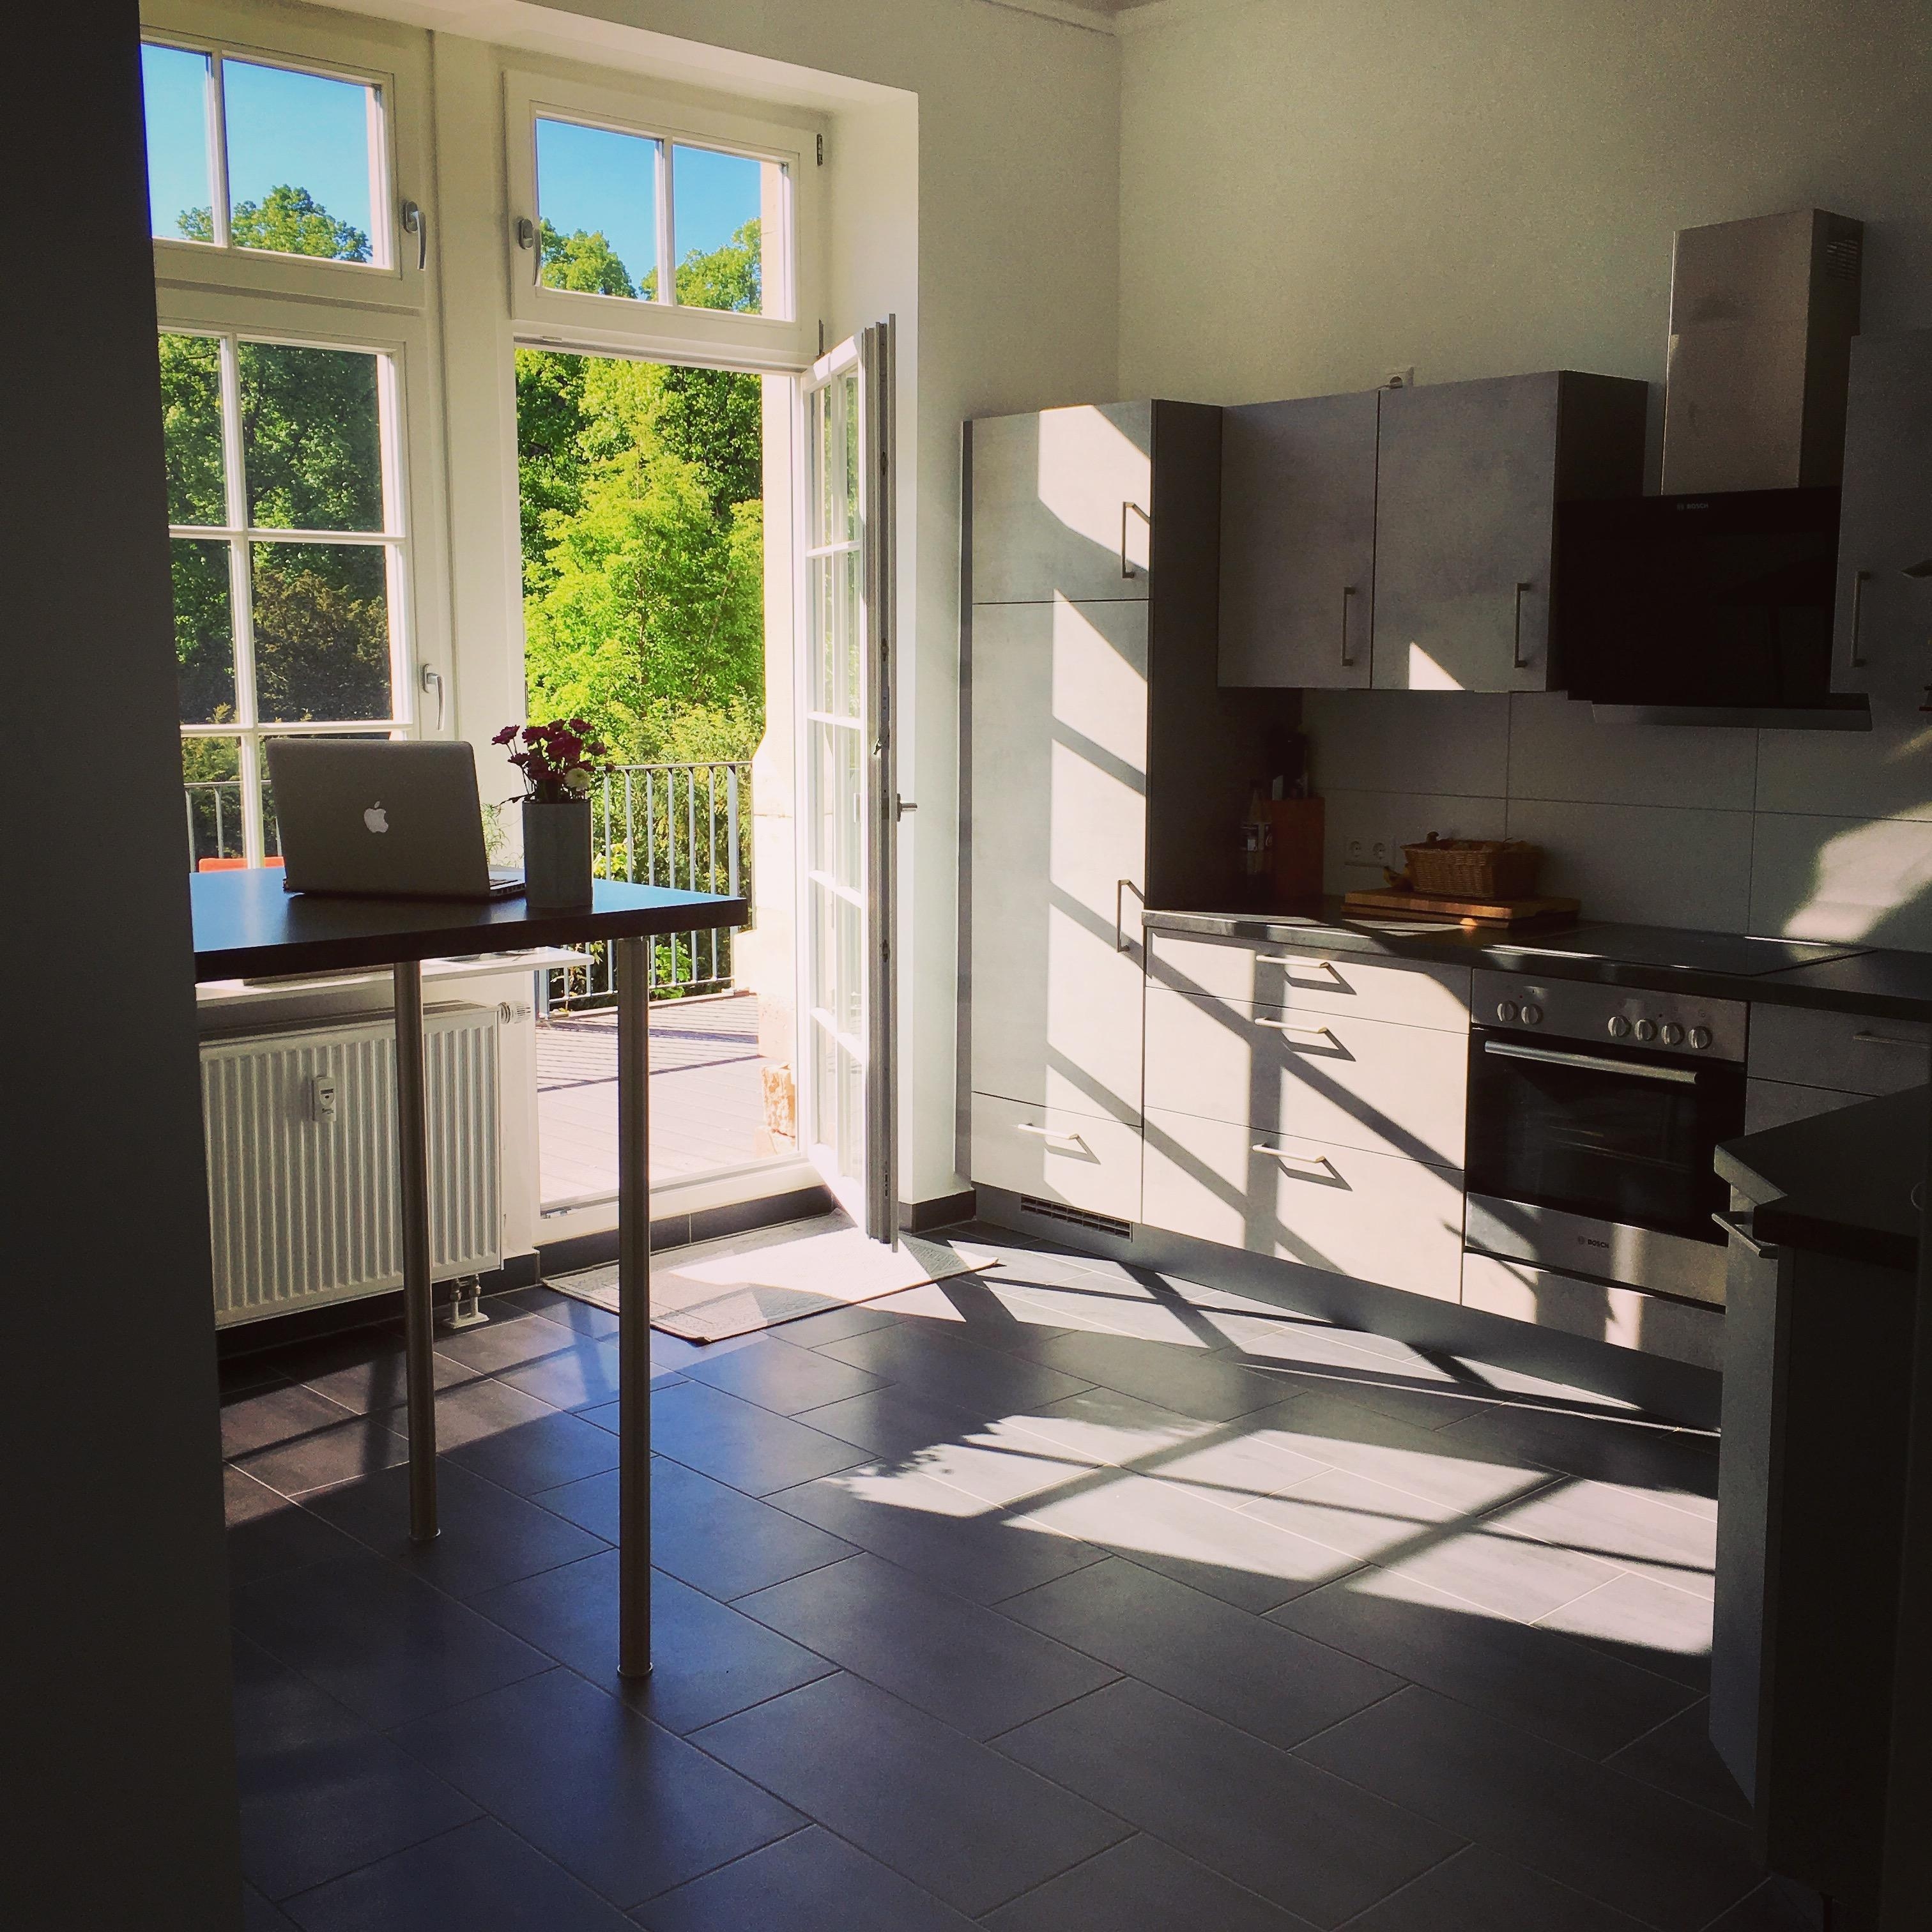 #kitchenview #sunshine #myhome #altbauliebe